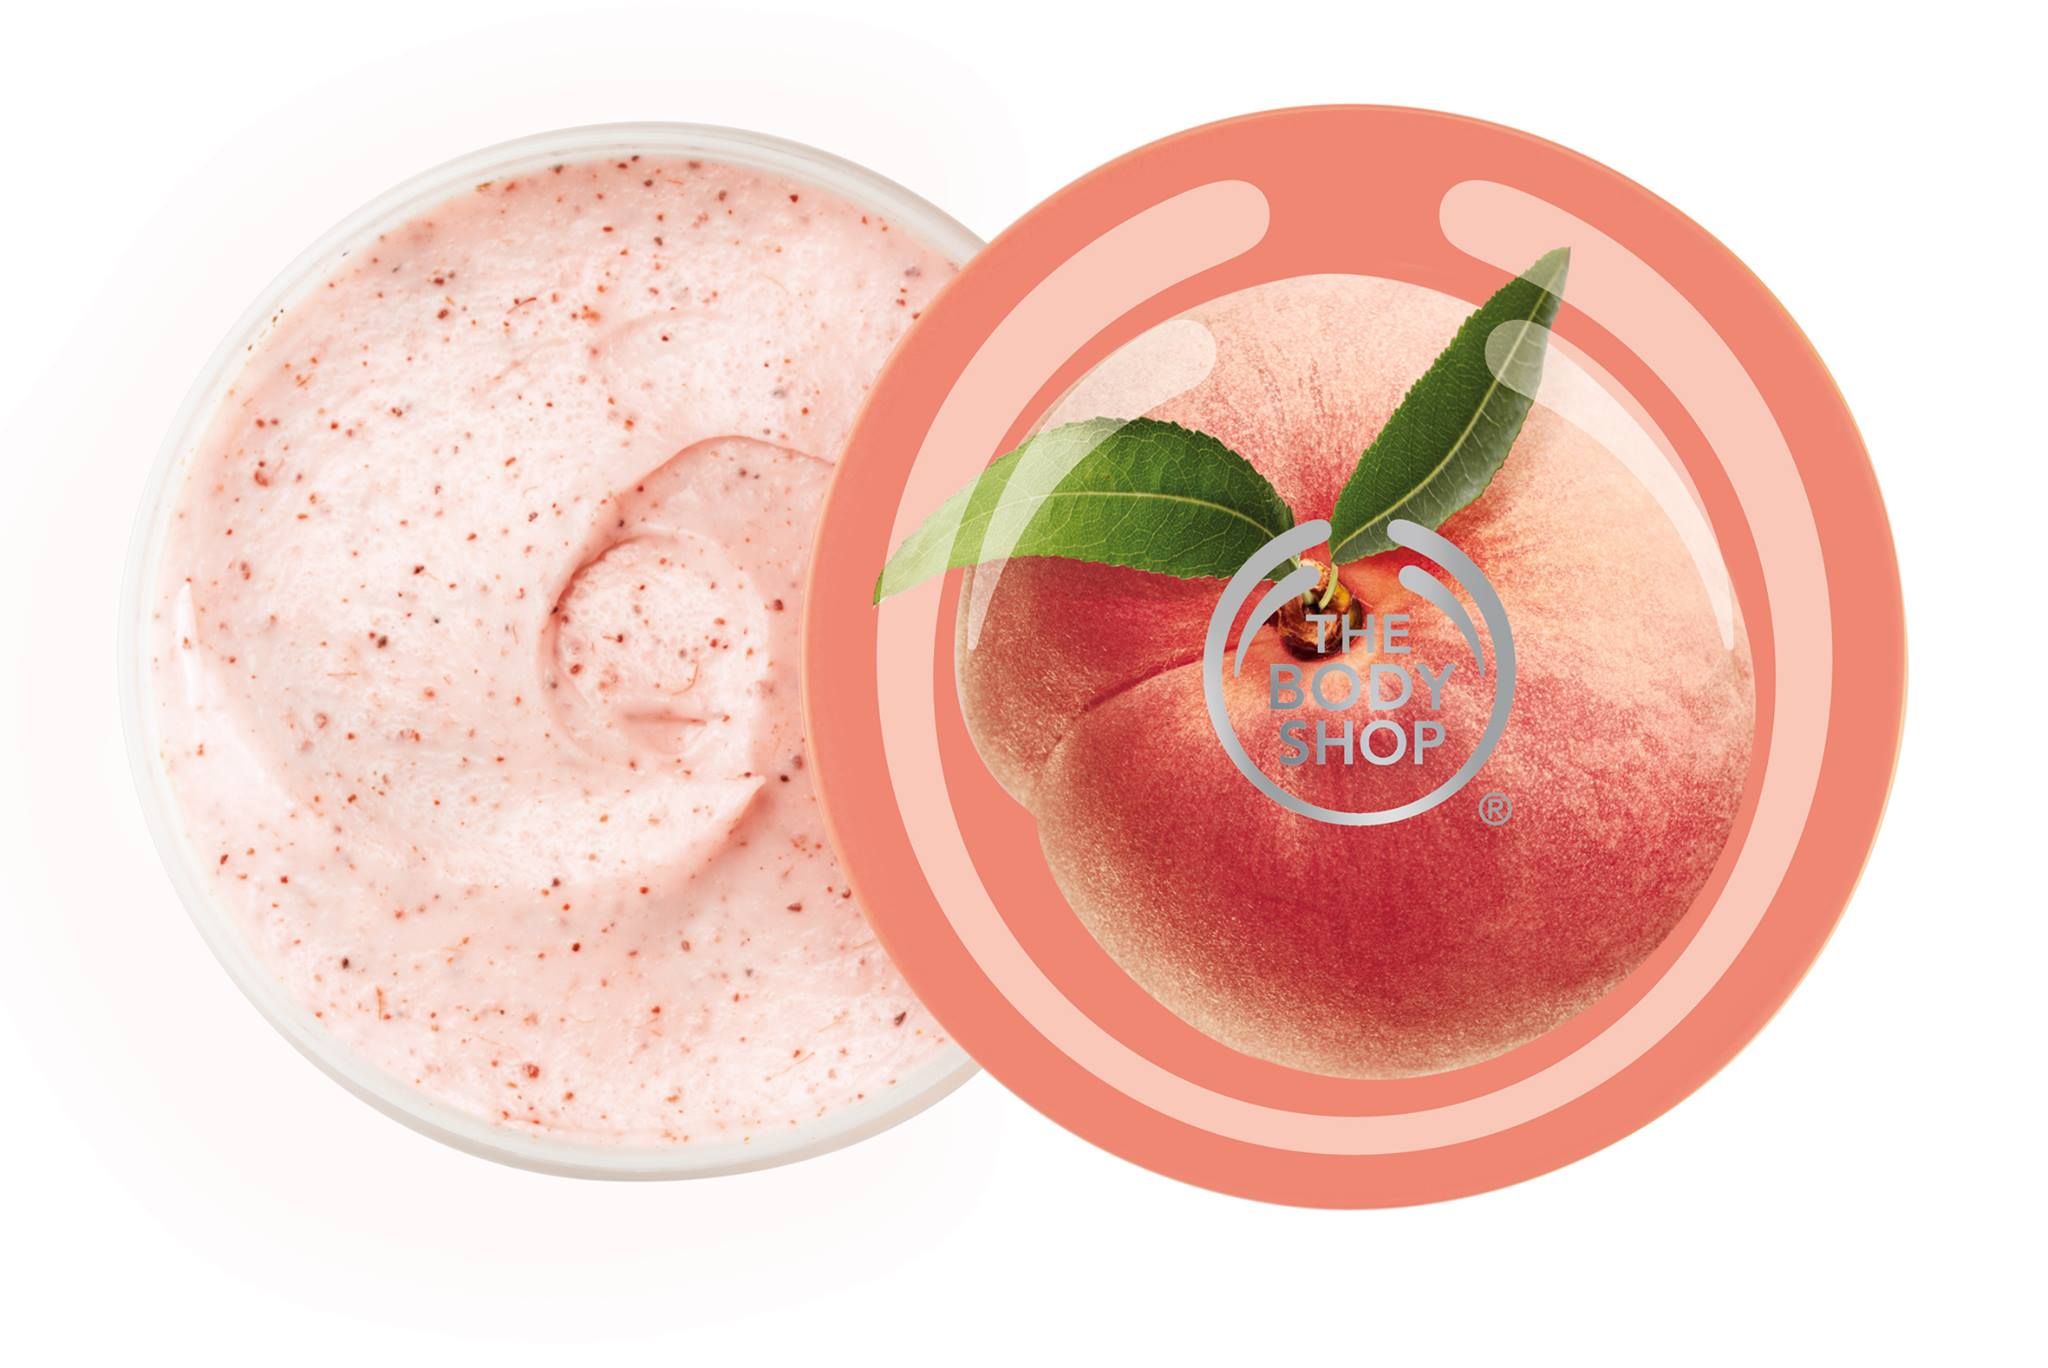 Vineyard Peach Body Scrub | The Body Shop | The Body Shop ...